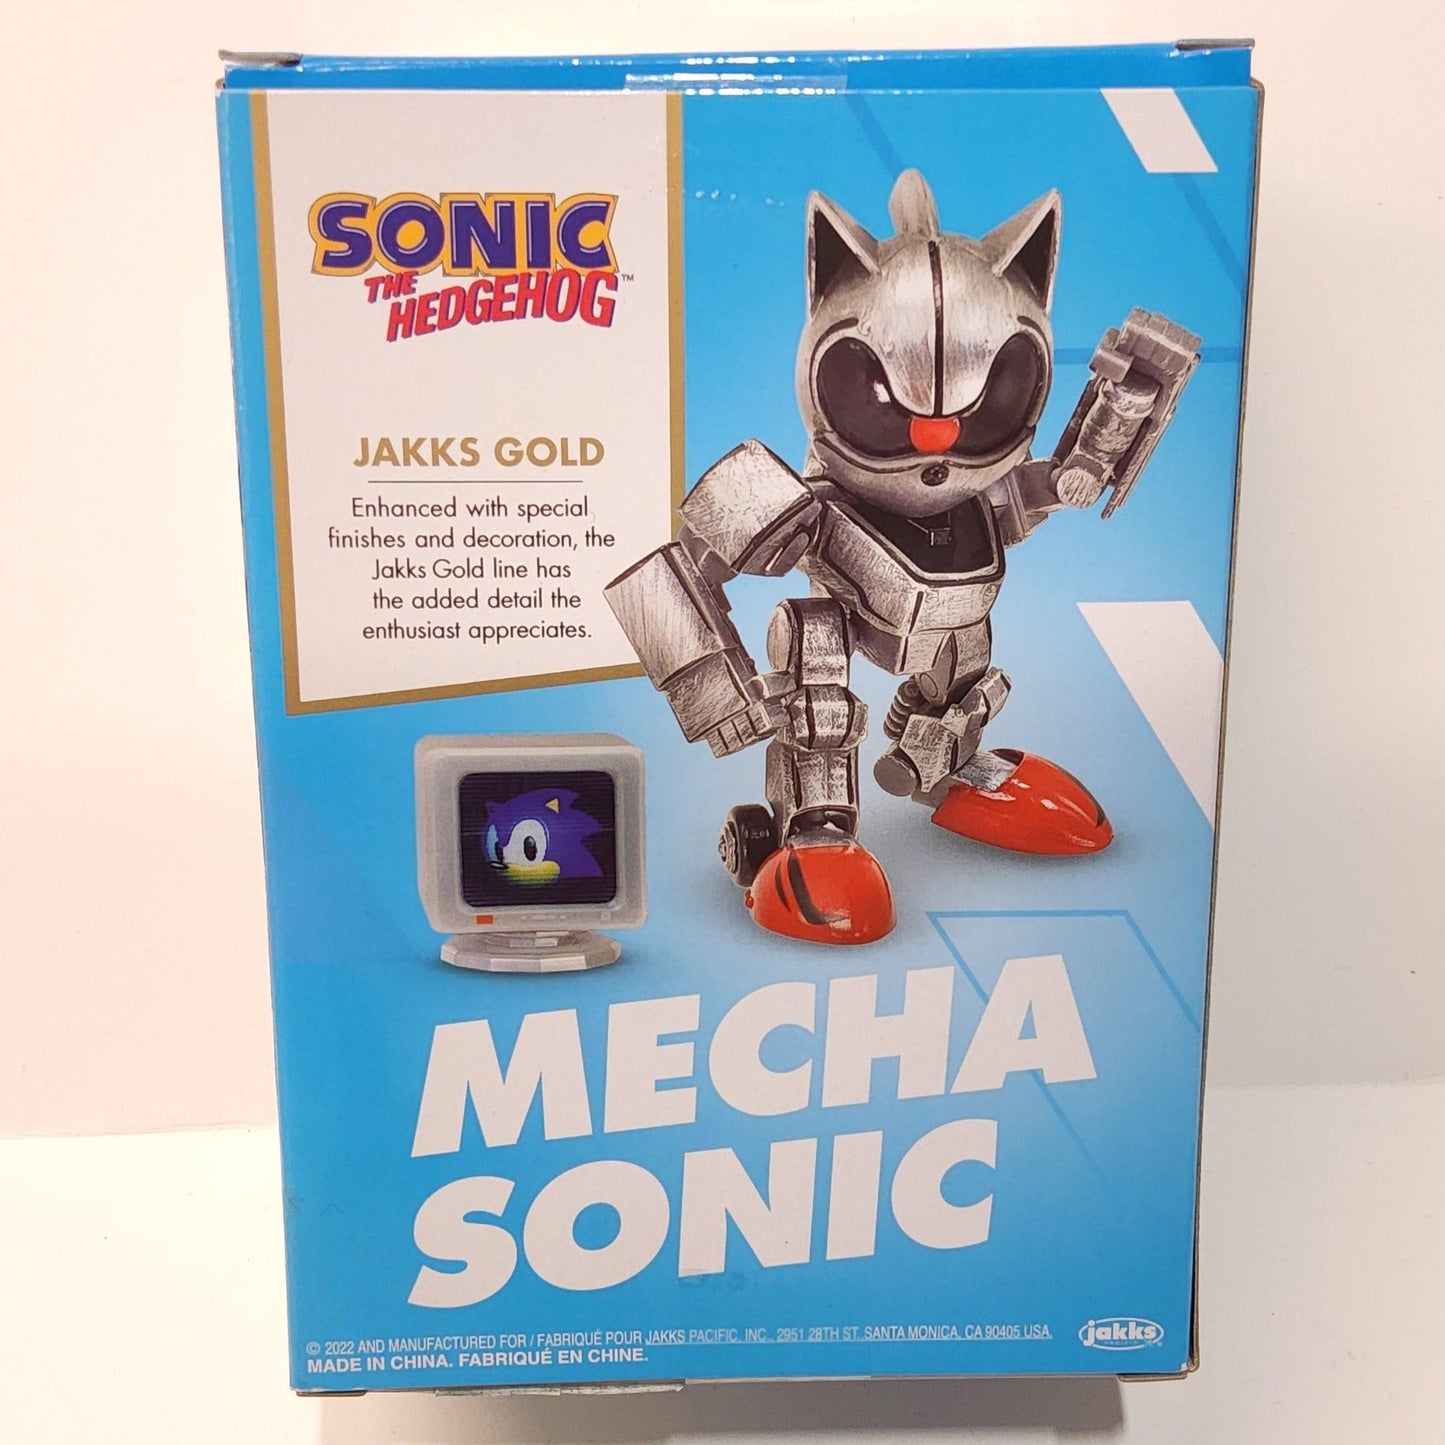 Sonic the Hedgehog 4" Mecha Sonic Action Figure Exclusive Jakks Gold Edition - Logan's Toy Chest